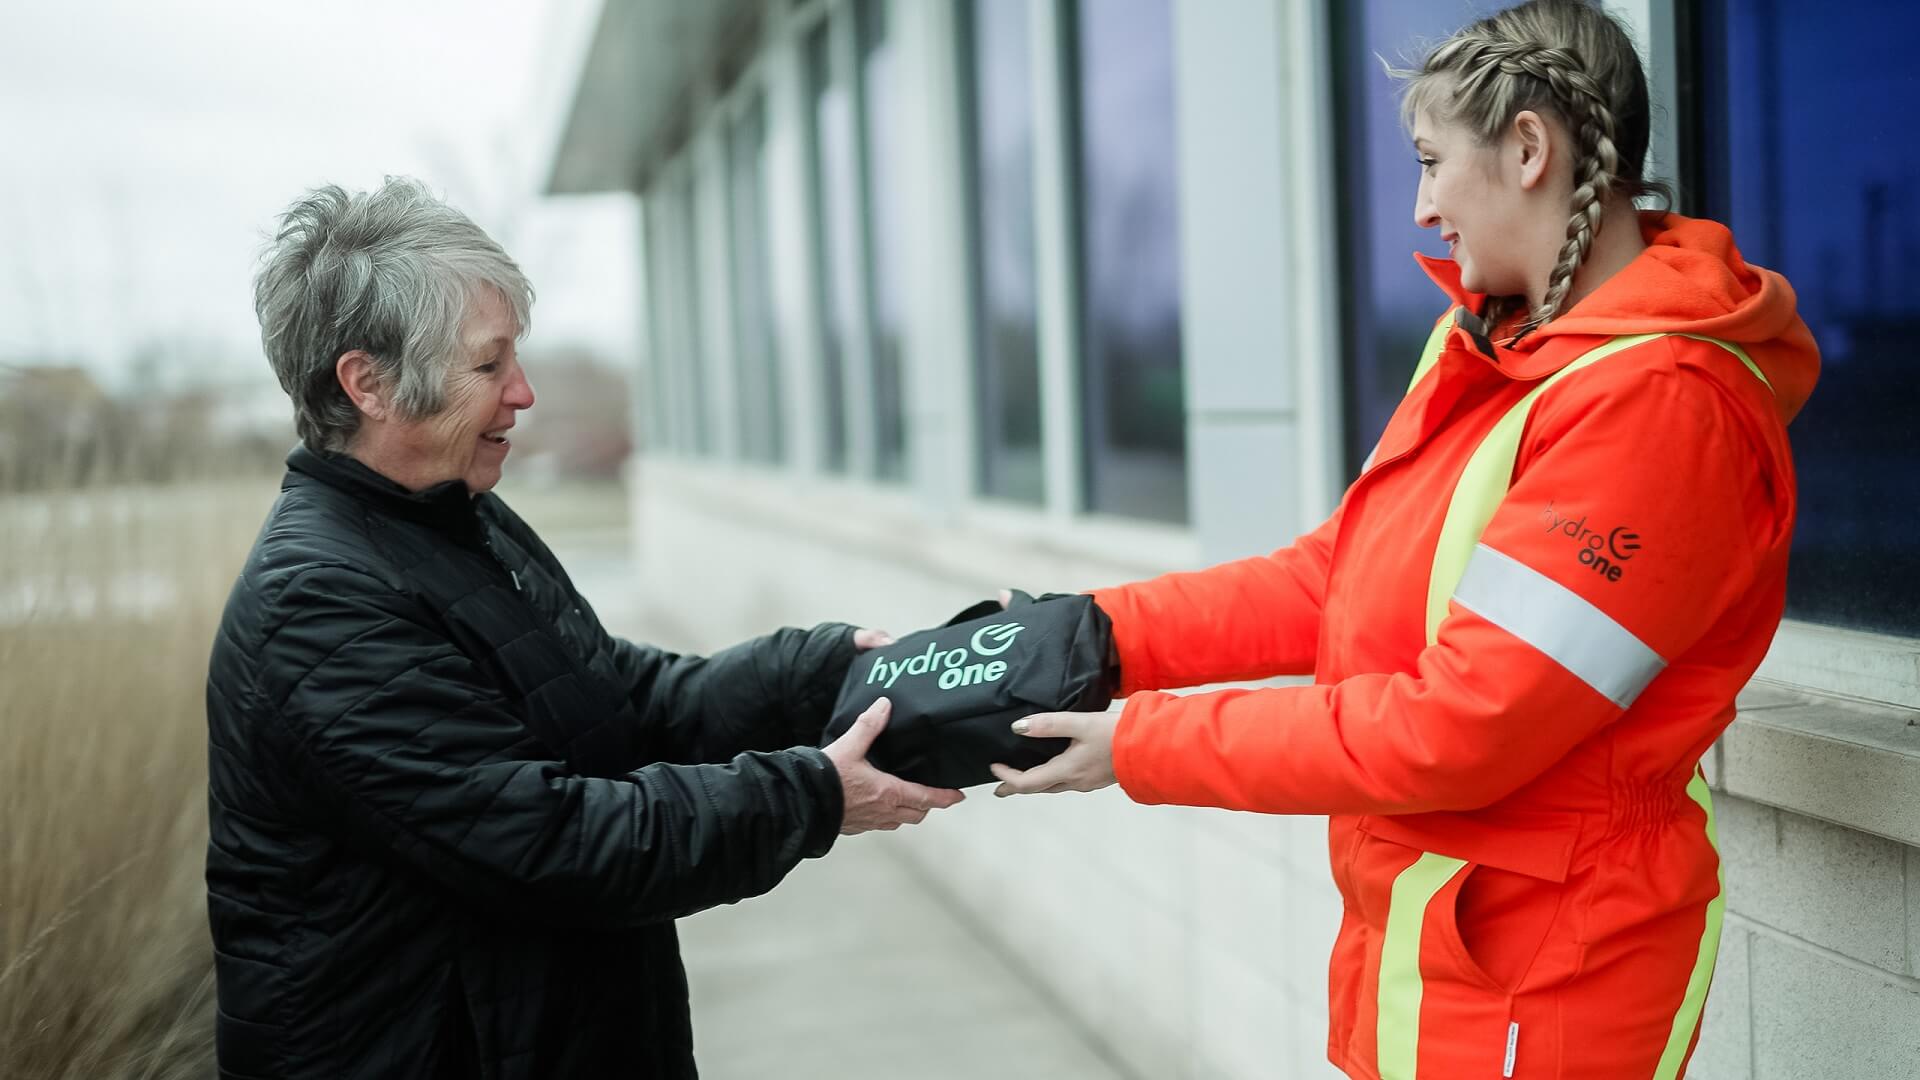 Hydro One employee handing customer an emergency preparedness kit